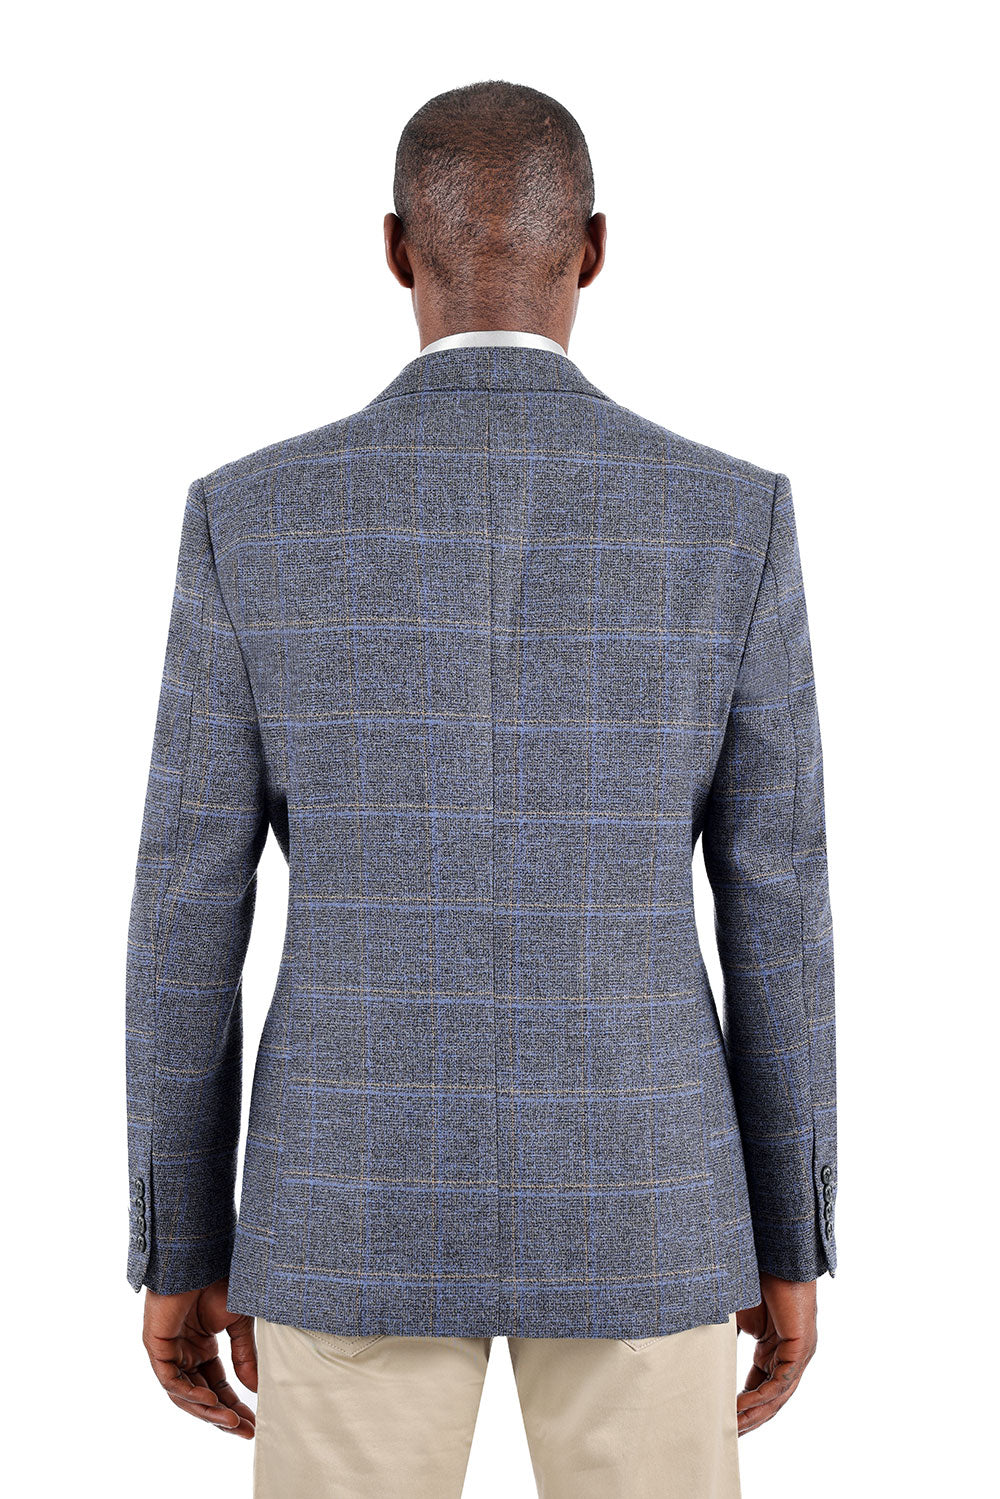 BARABAS Men's Wool Tweed Geometric Peak Lapel Blazer 3BL11 Blue